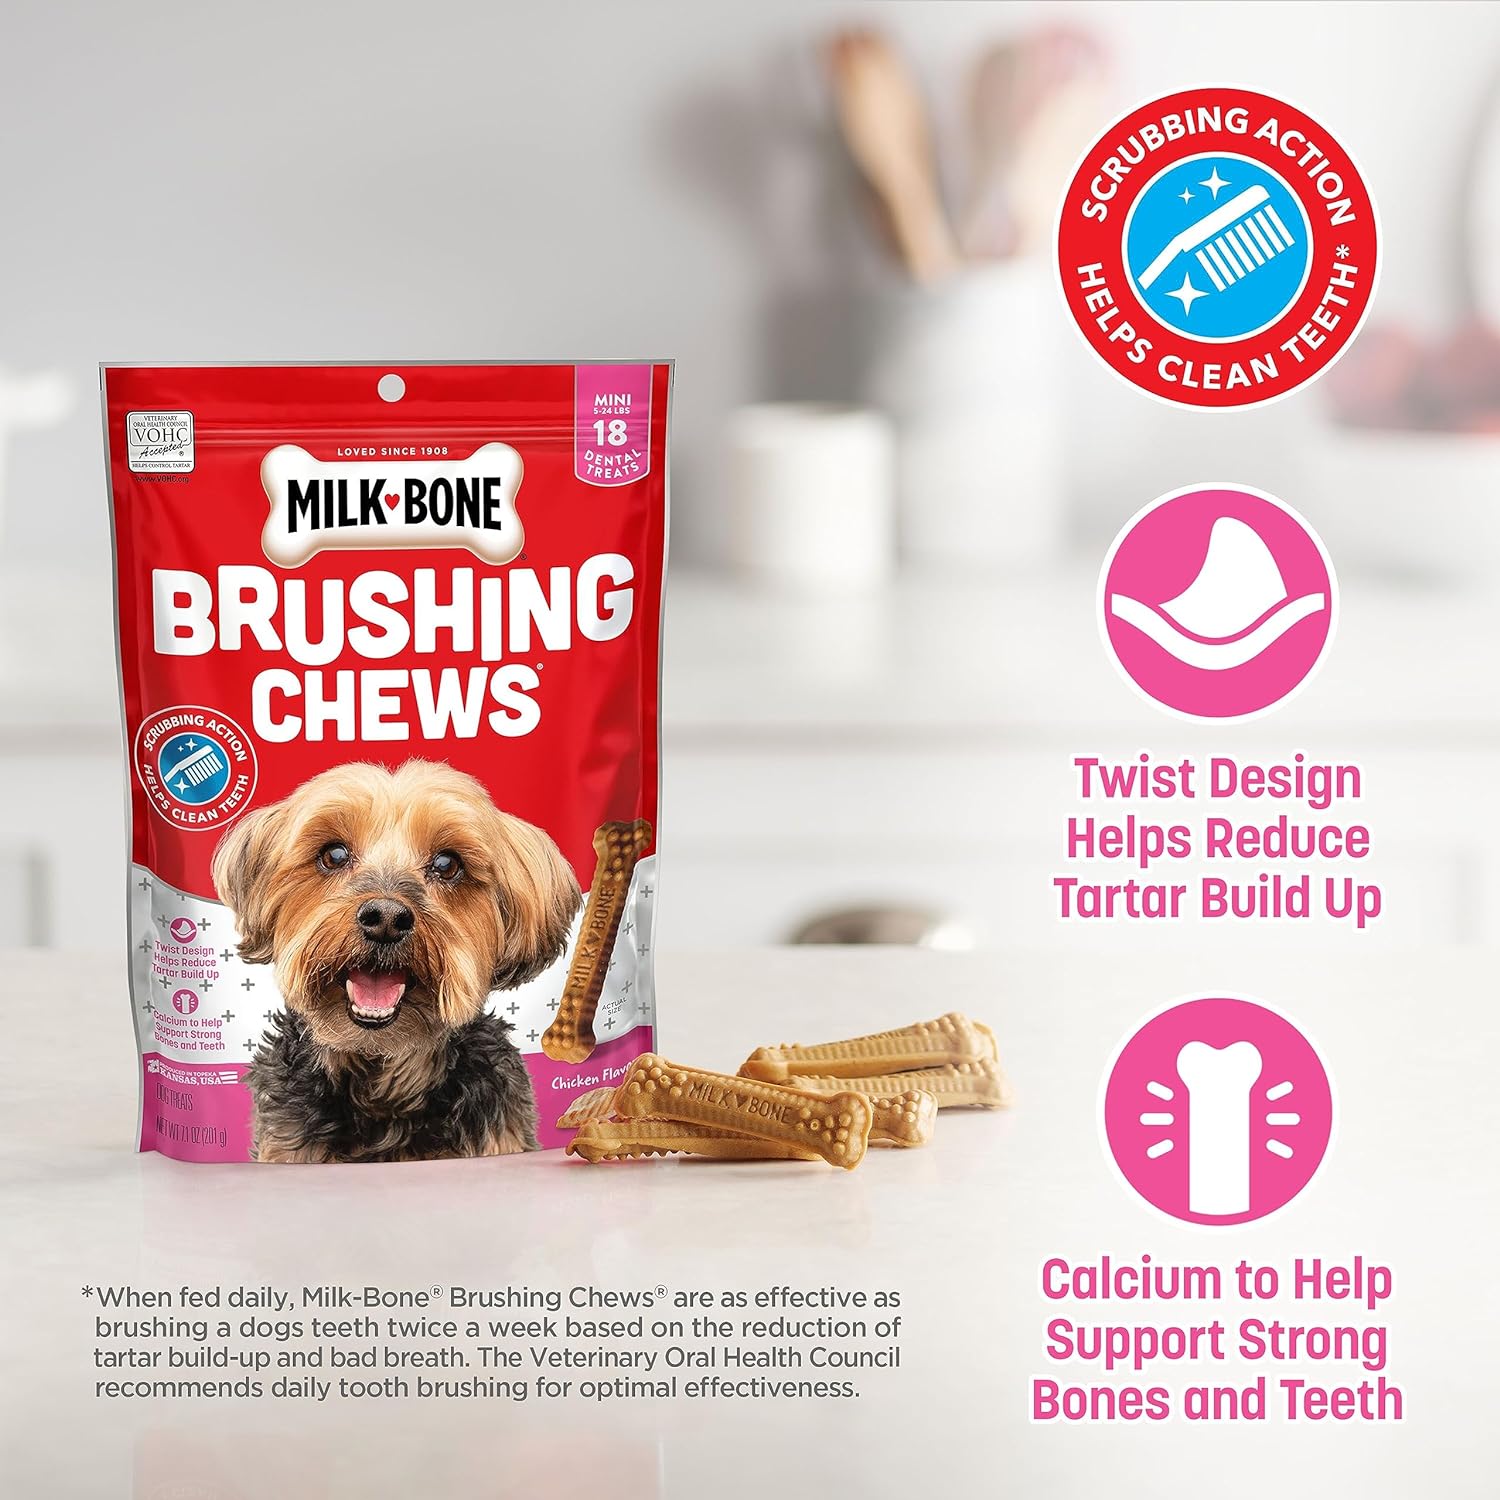 Milk-Bone Original Brushing Chews, 18 Mini Daily Dental Dog Treats (Pack of 5) Scrubbing Action Helps Clean Teeth : Pet Supplies